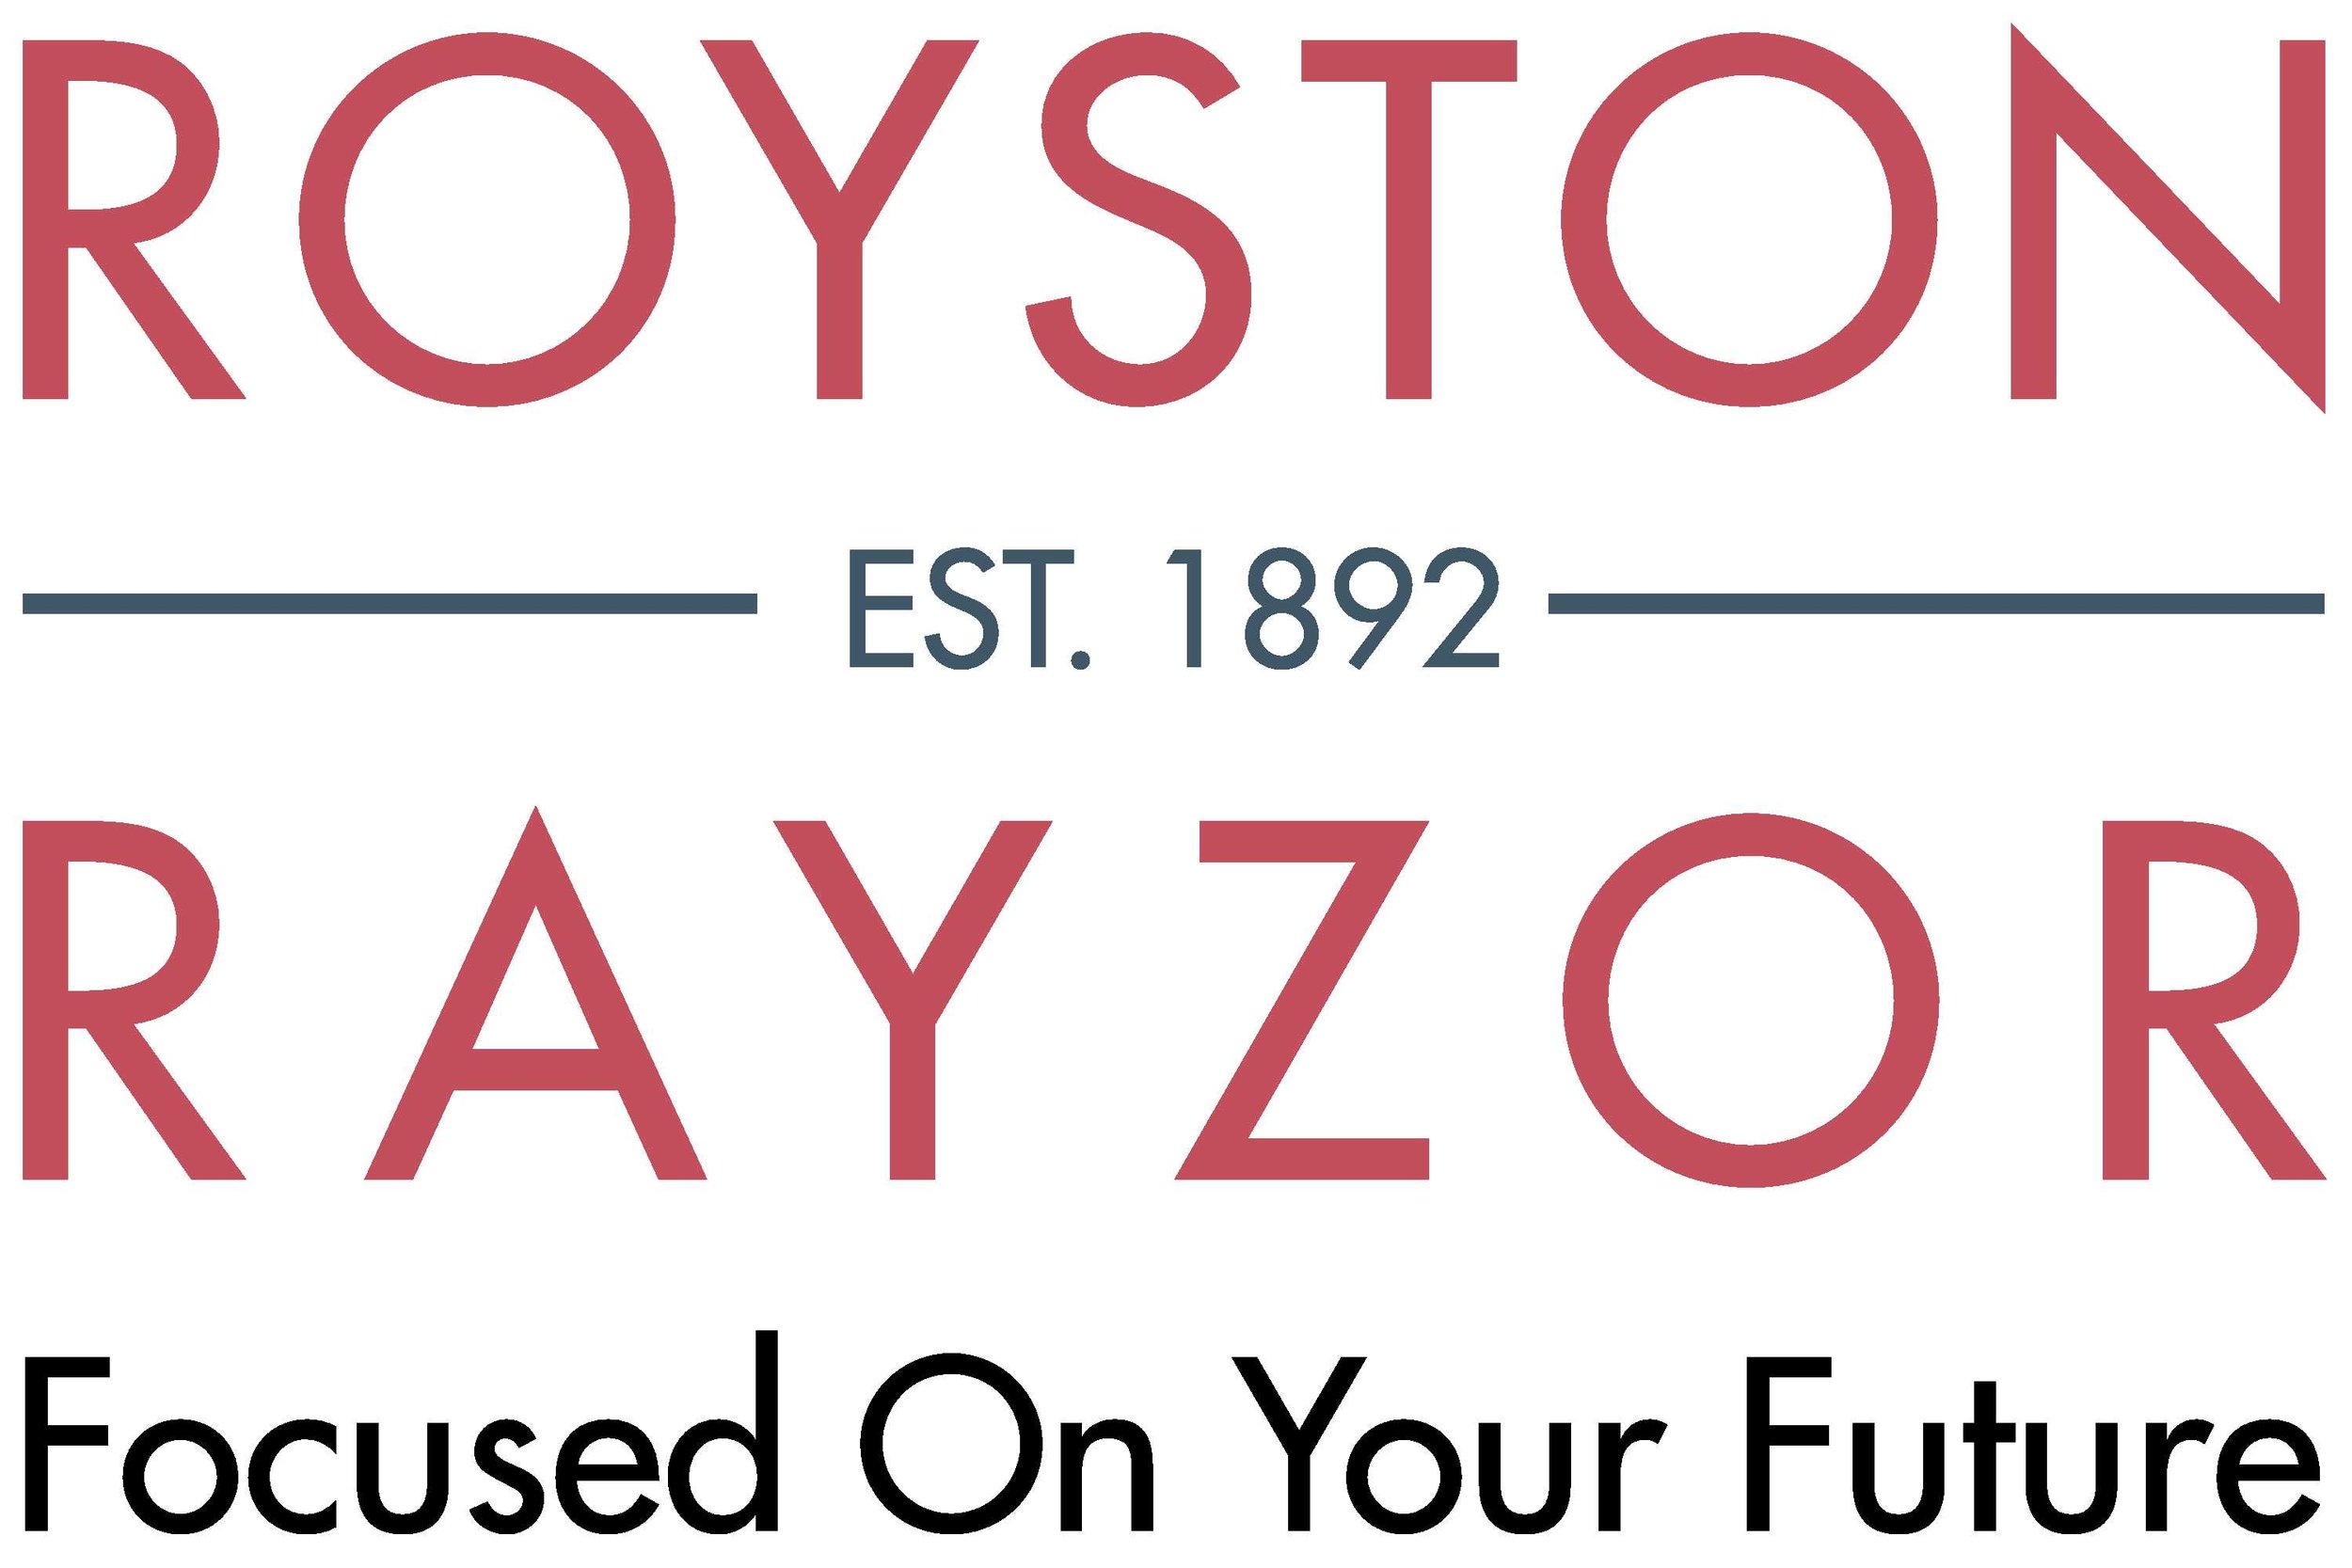 Royston_Rayzor_logo_tagline.jpg